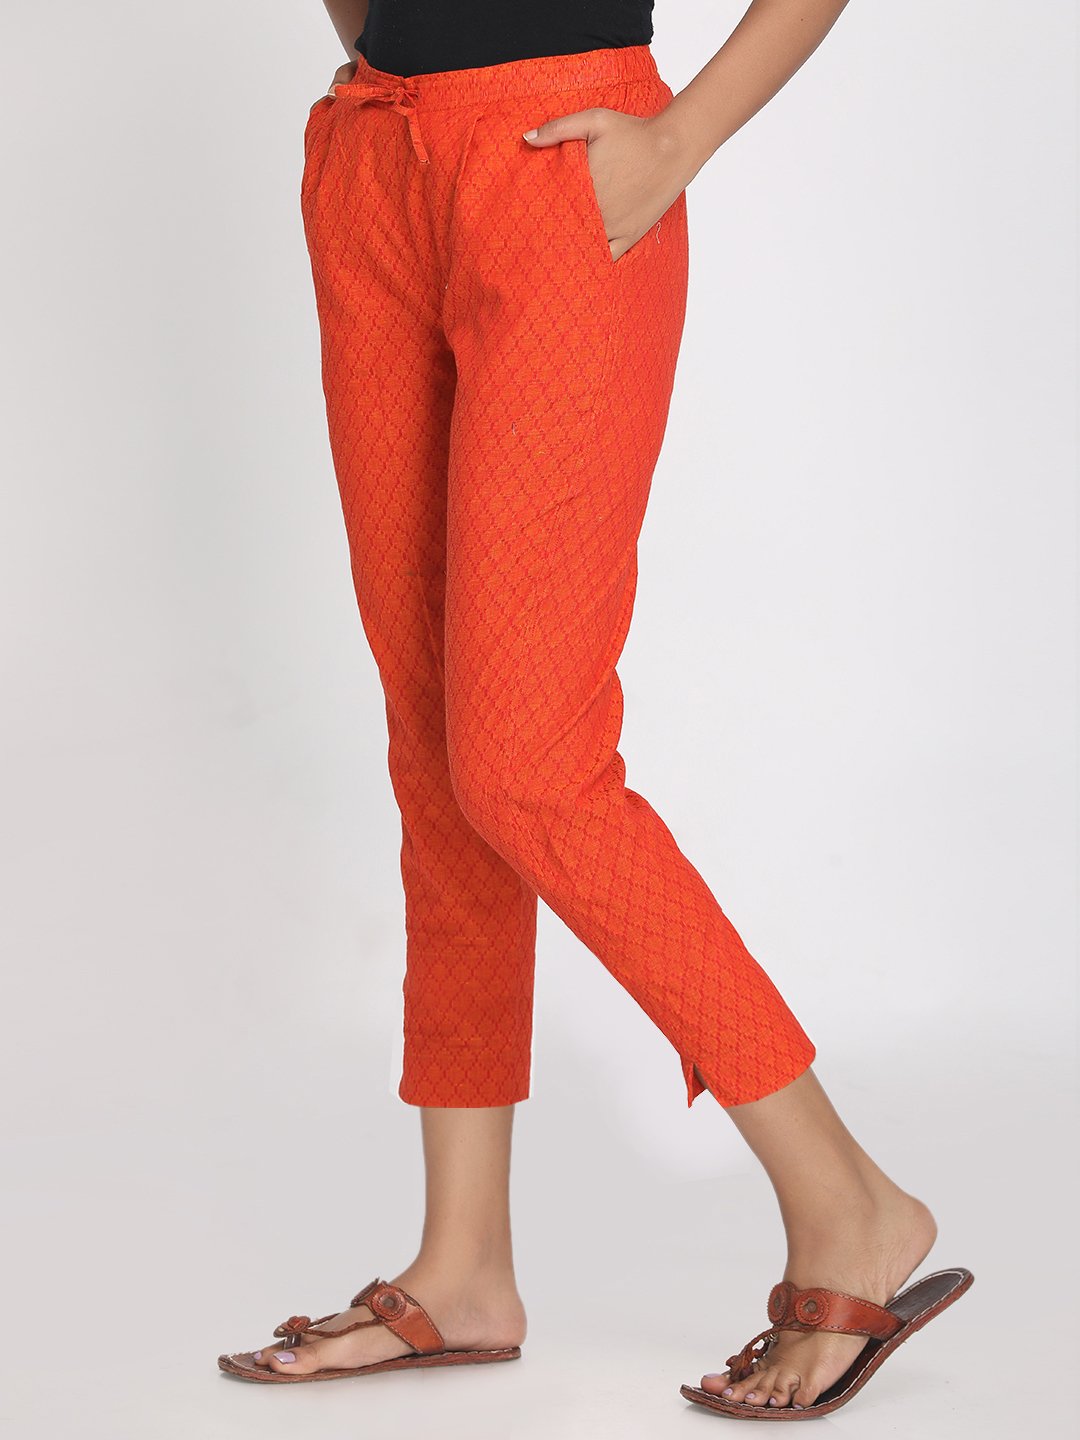 100% cotton orange self designed cropped pant